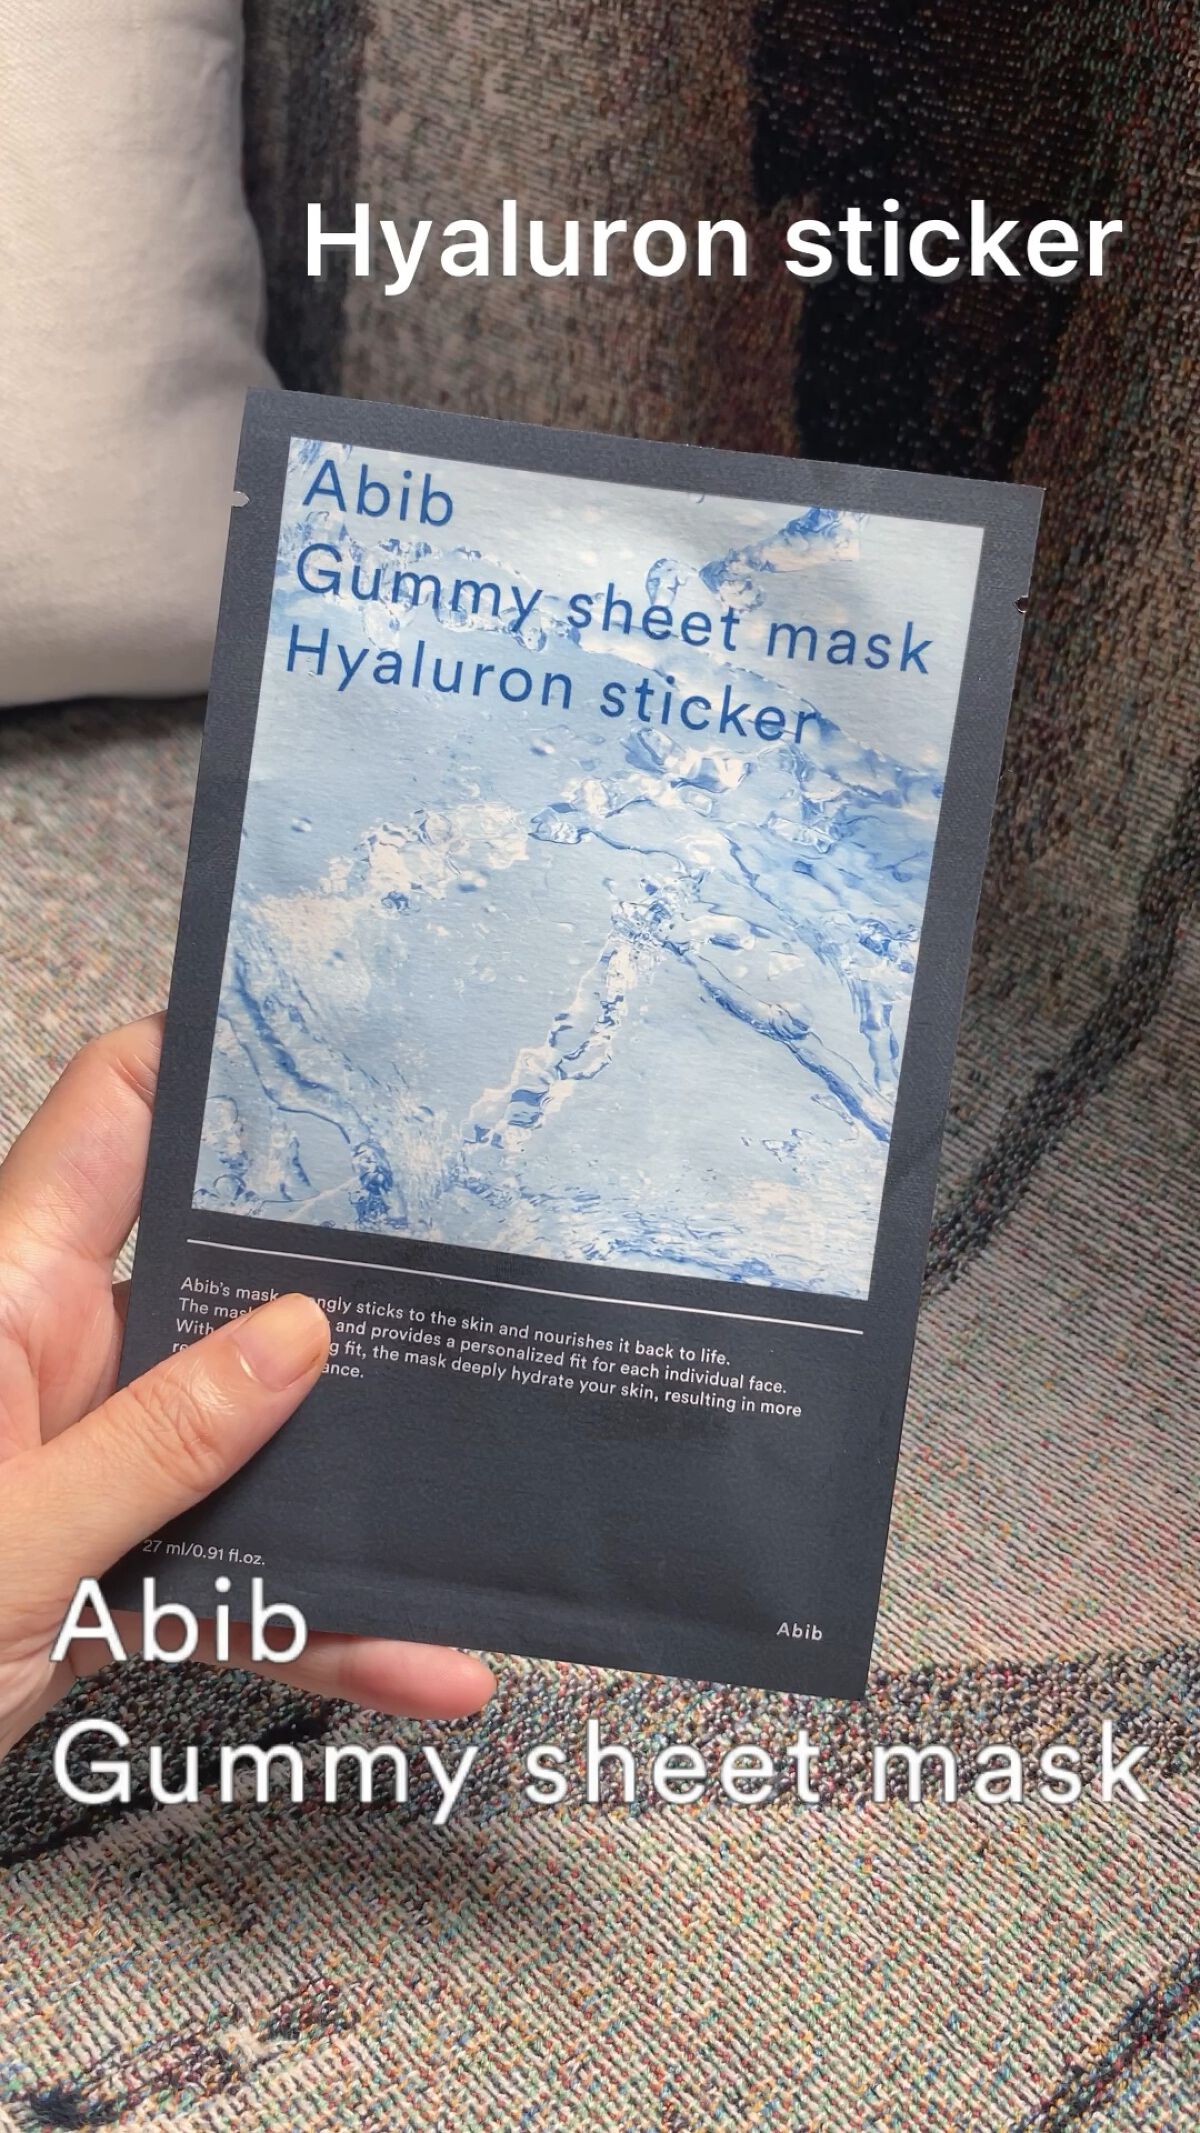 Gummy sheet mask Hyaluron sticker/Abib /シートマスク・パックの動画クチコミ3つ目